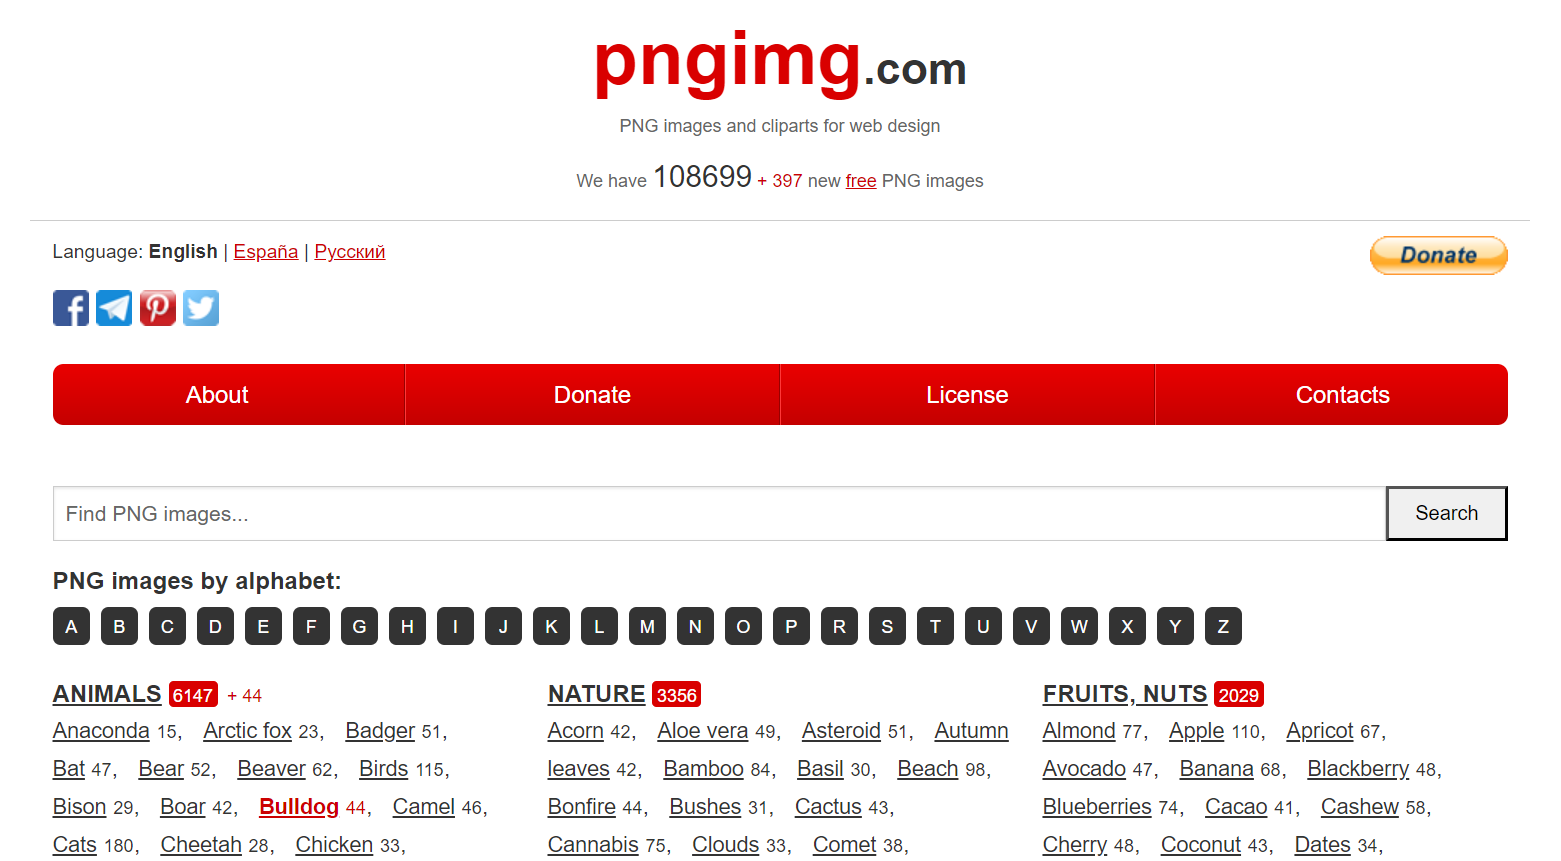 PNGimg.com 是一个提供高质量 PNG 图像资源的网站 可商用图片